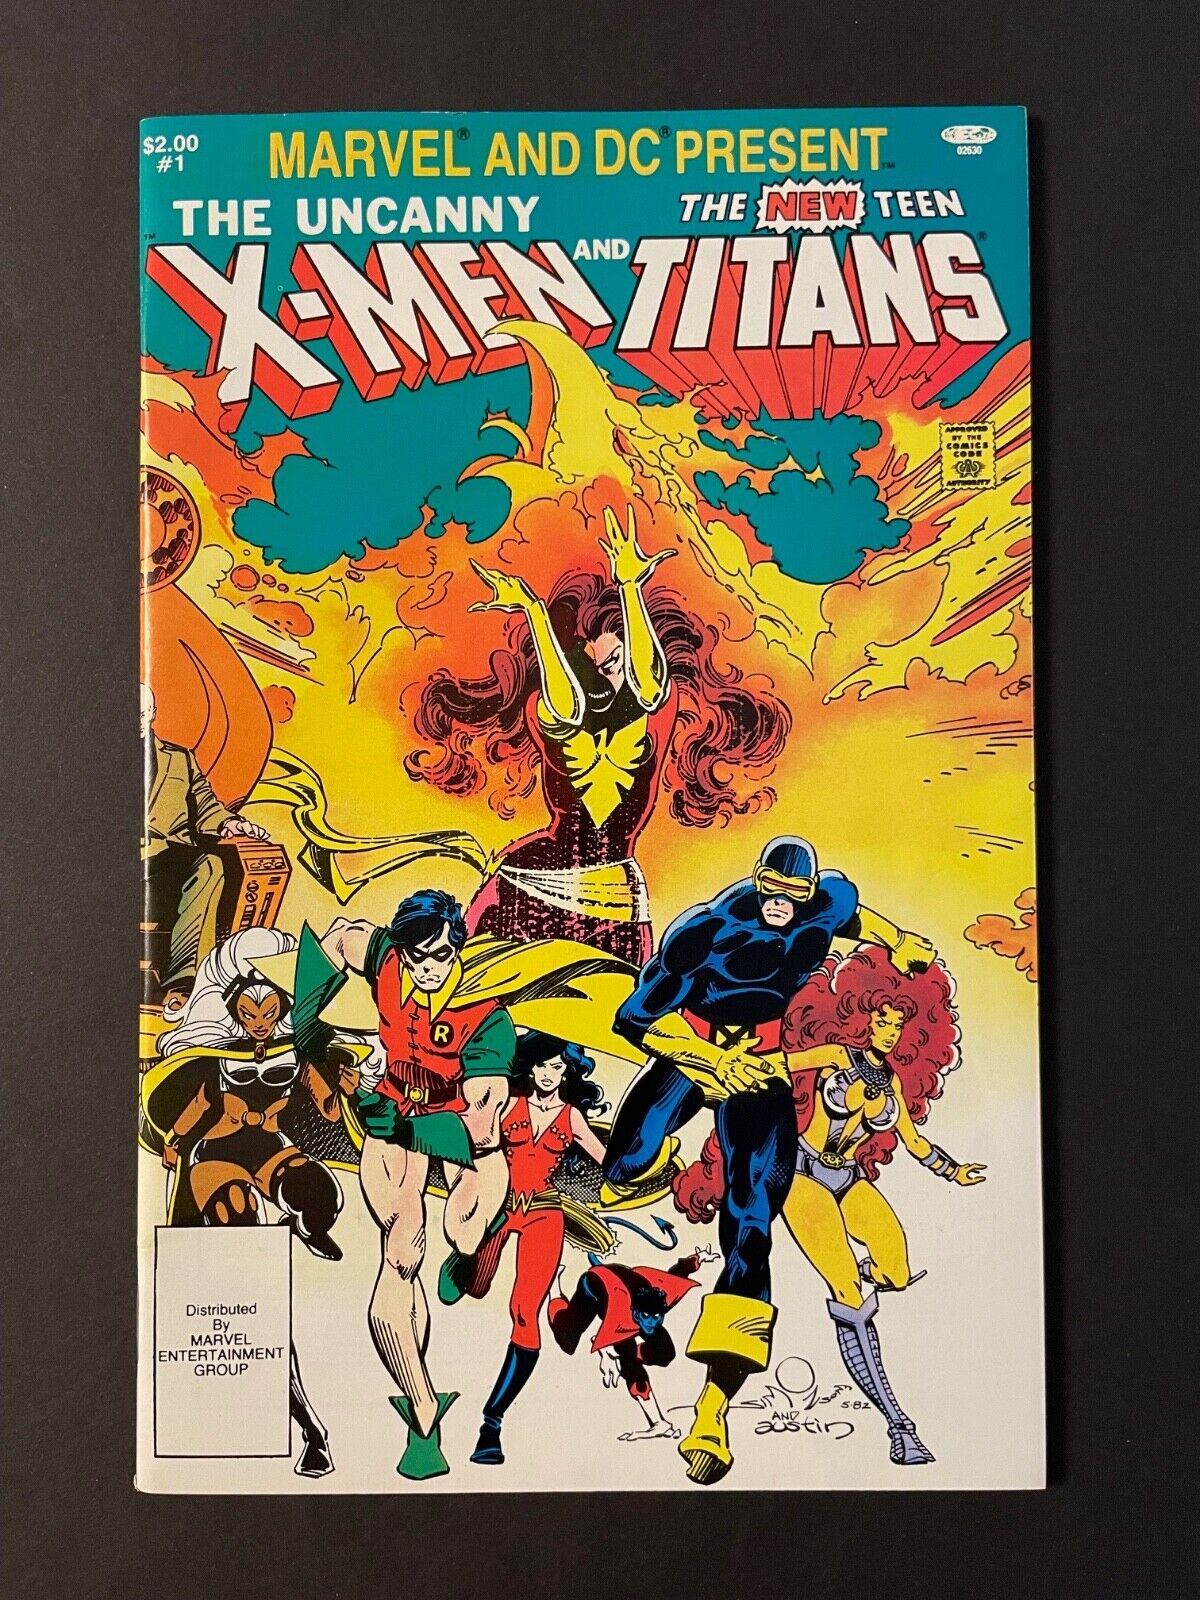 MARVEL & DC PRESENT The Uncanny X-Men & The New Teen Titans (1982) Gemini mailer